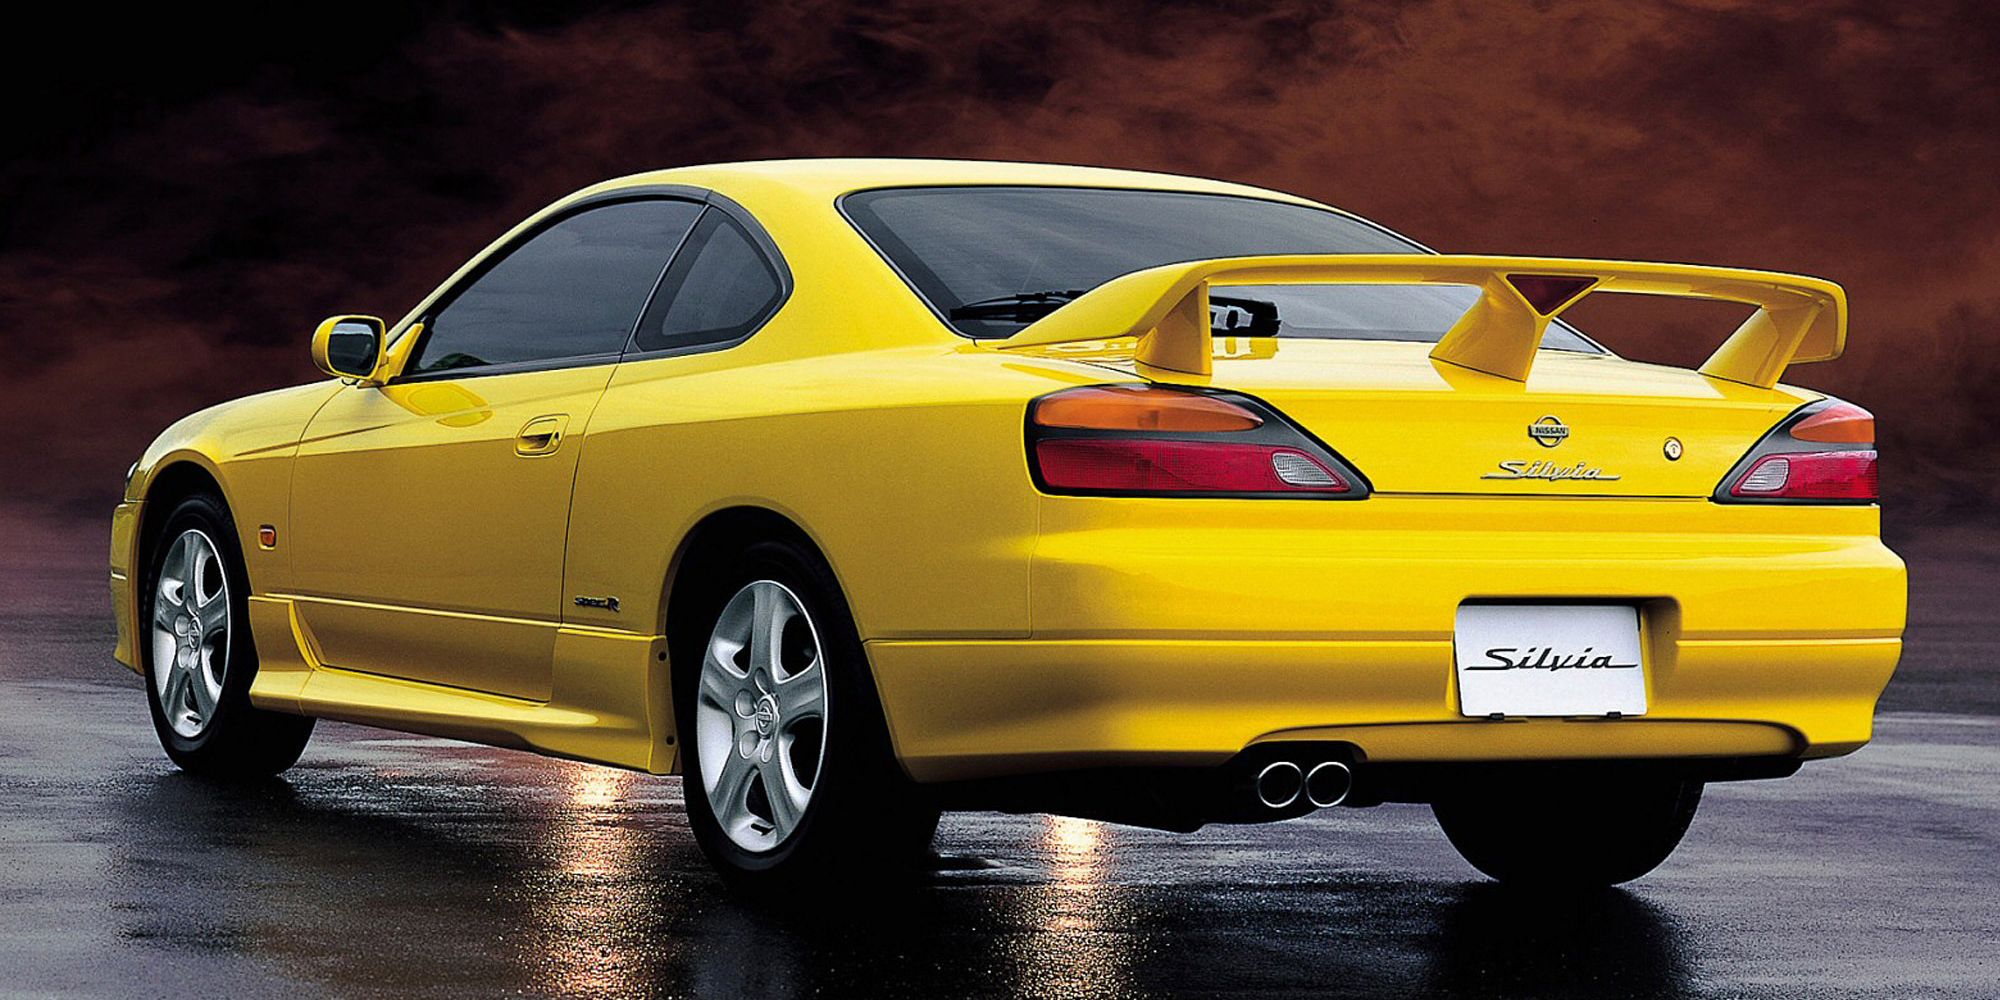 Silvia S15 Yellow